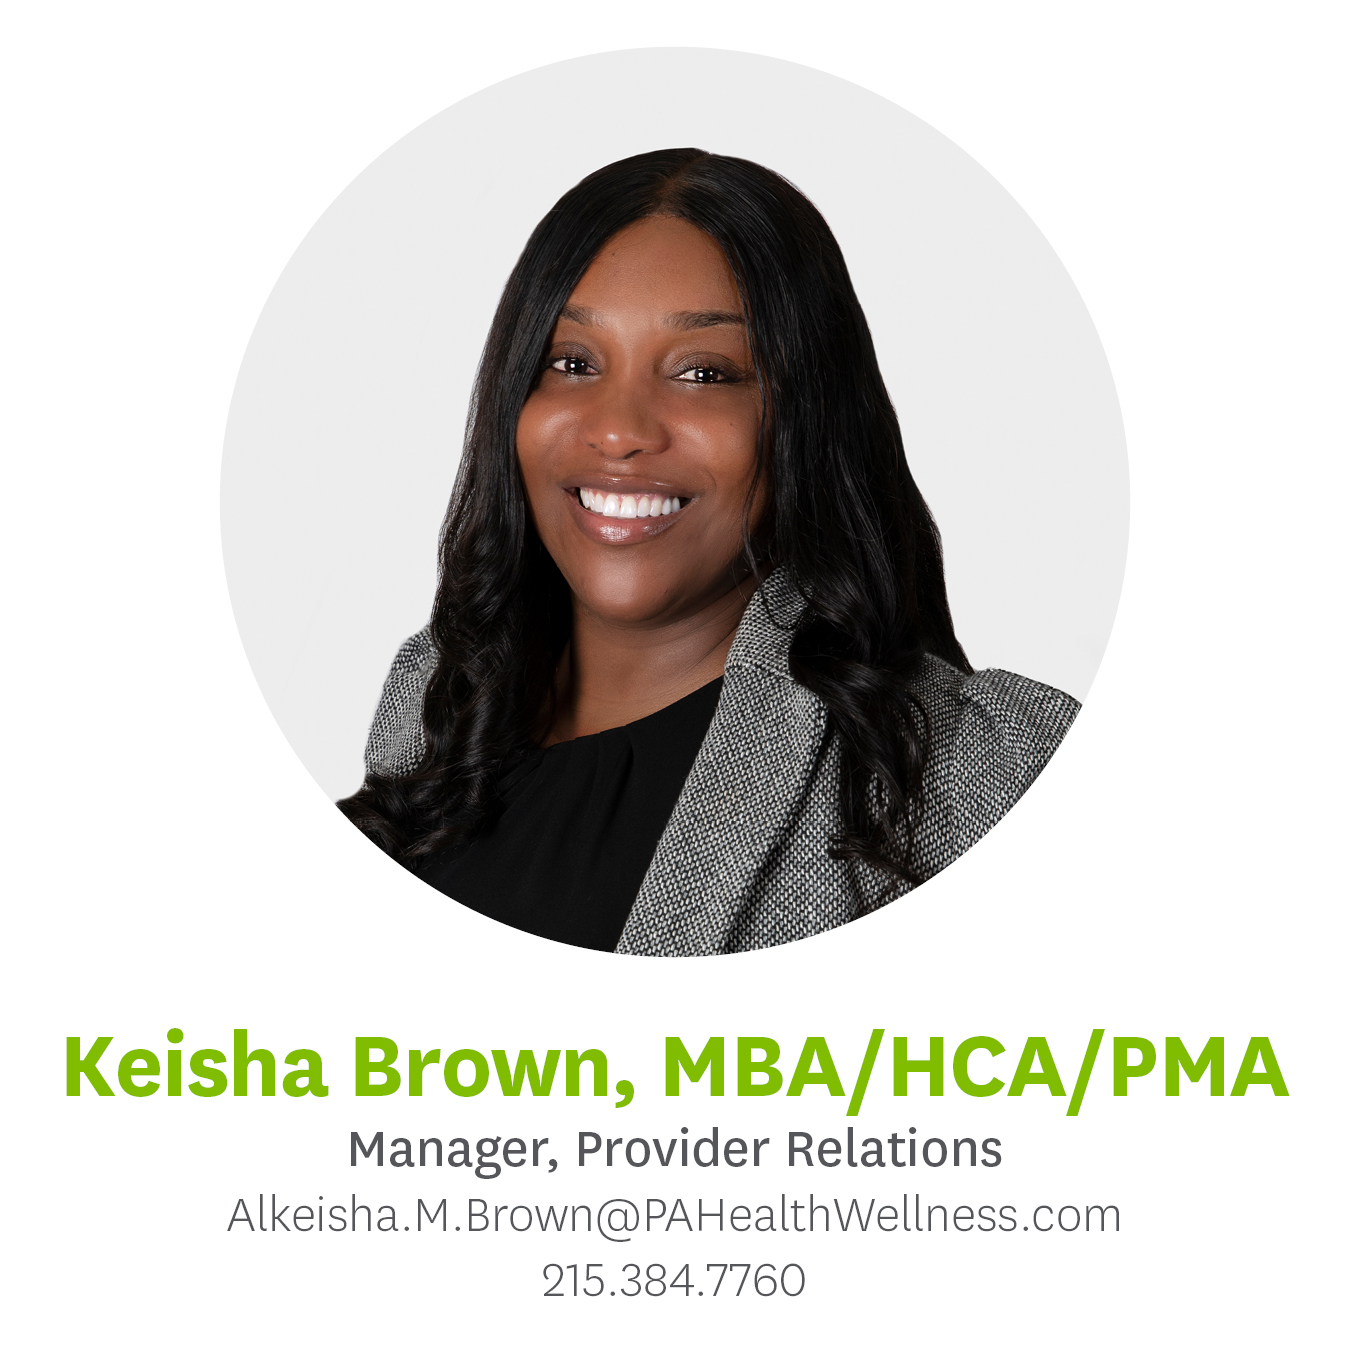 Keisha Brown, MBA/HCA/PMA, Manager, Provider Relations, Alkeisha.M.Brown@PAHealthWellness.com, 215.384.7760